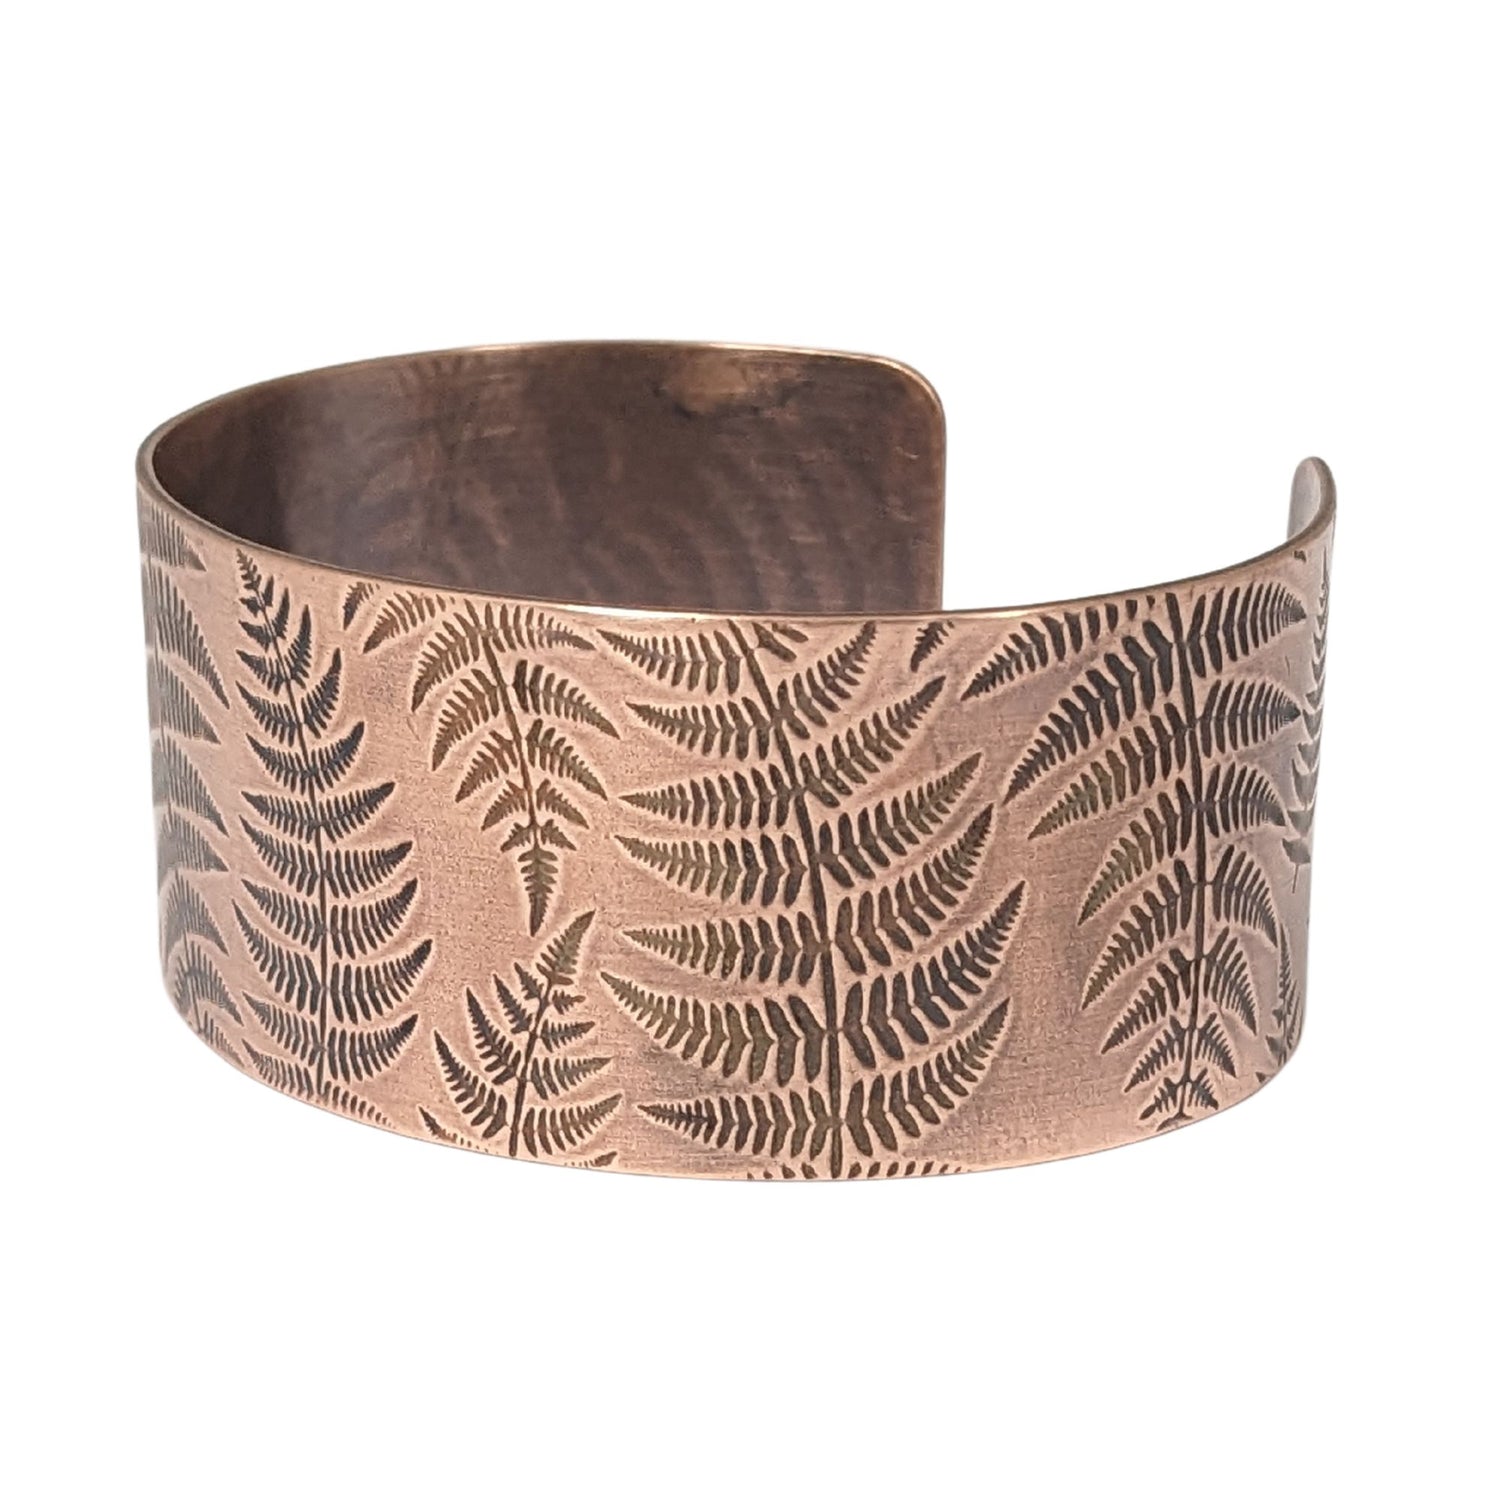 copper cuff bracelet covered in  impressions of fern fronds.